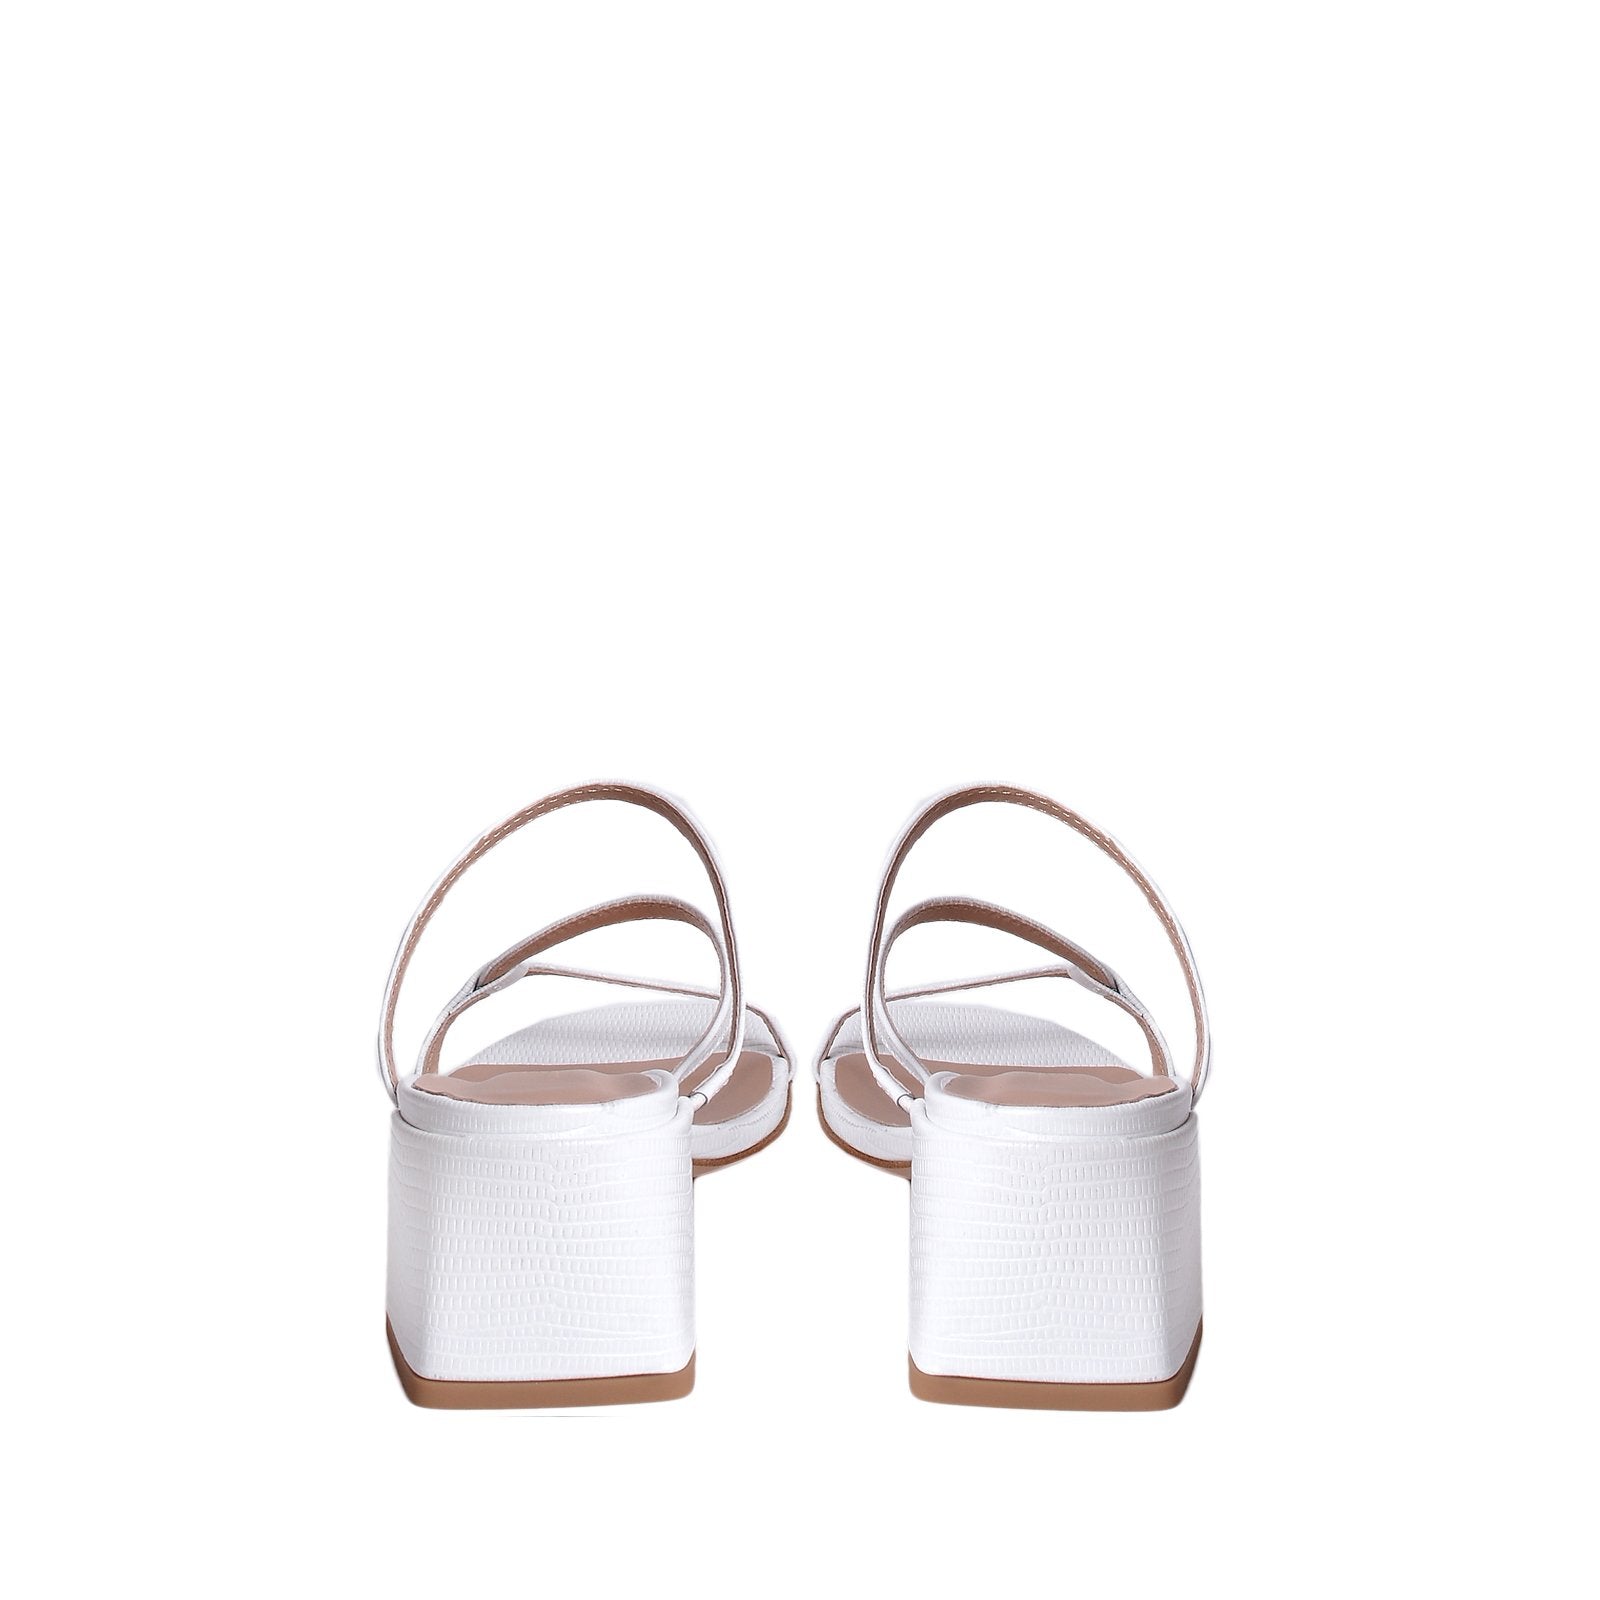 Perla White Tejus Leather Sandals 790-010-1 - 7